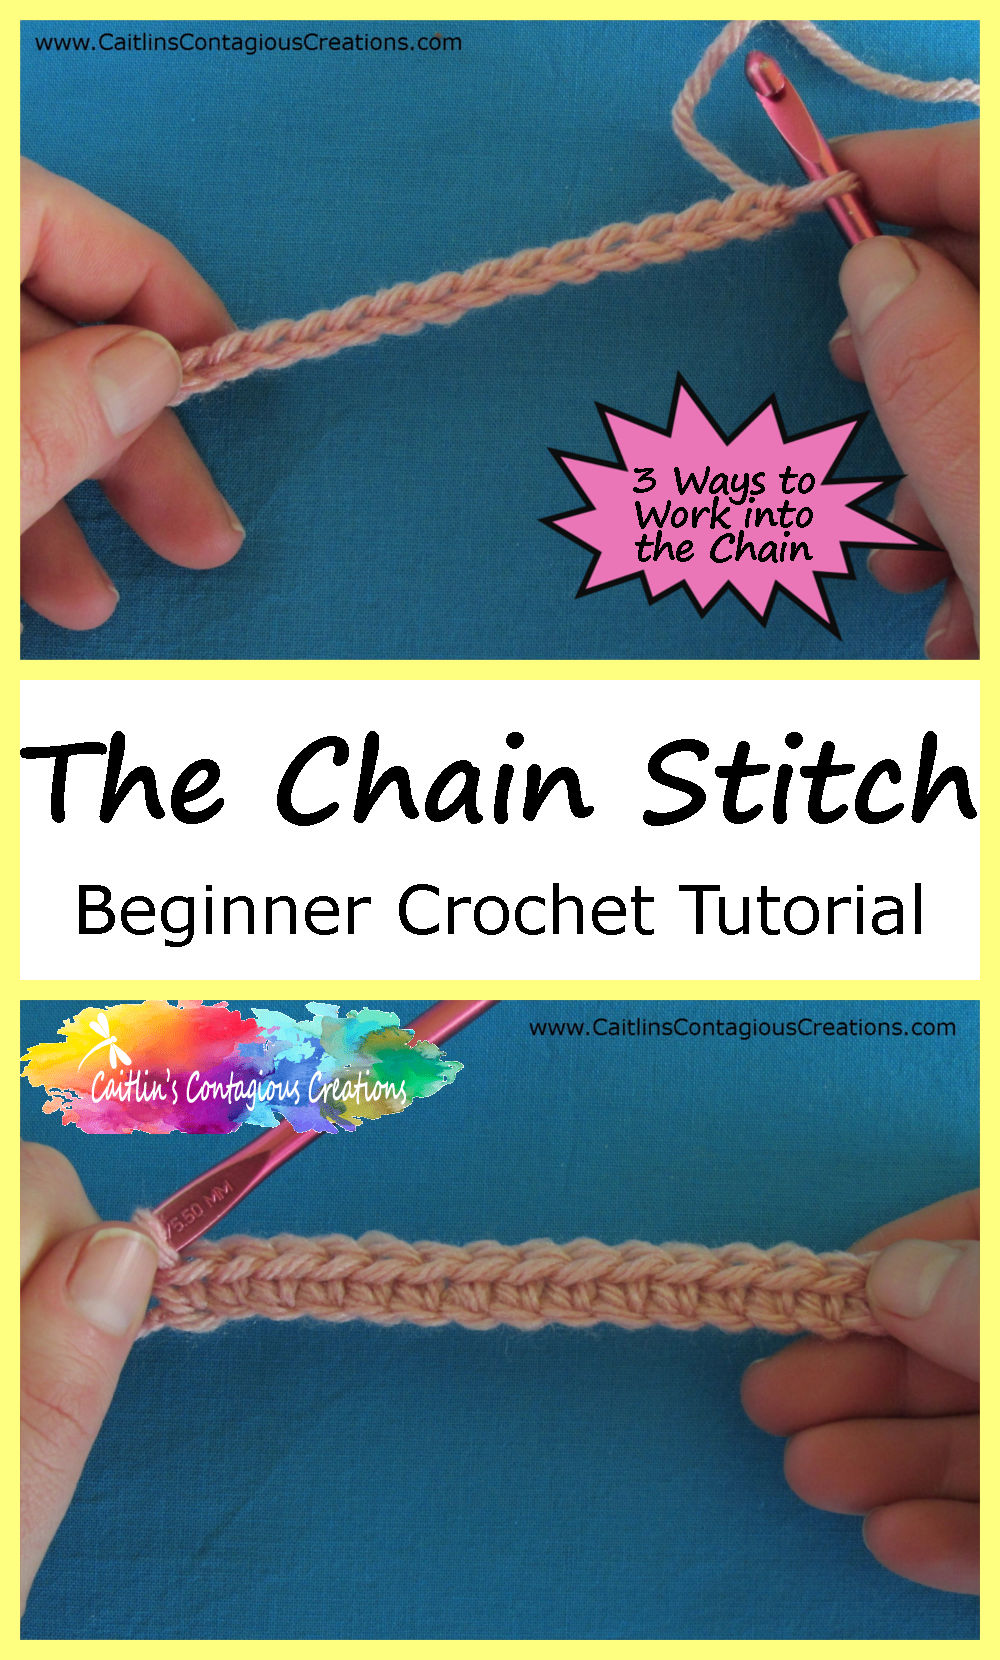 Learn to Crochet the Chain Stitch Beginner Crochet Guide